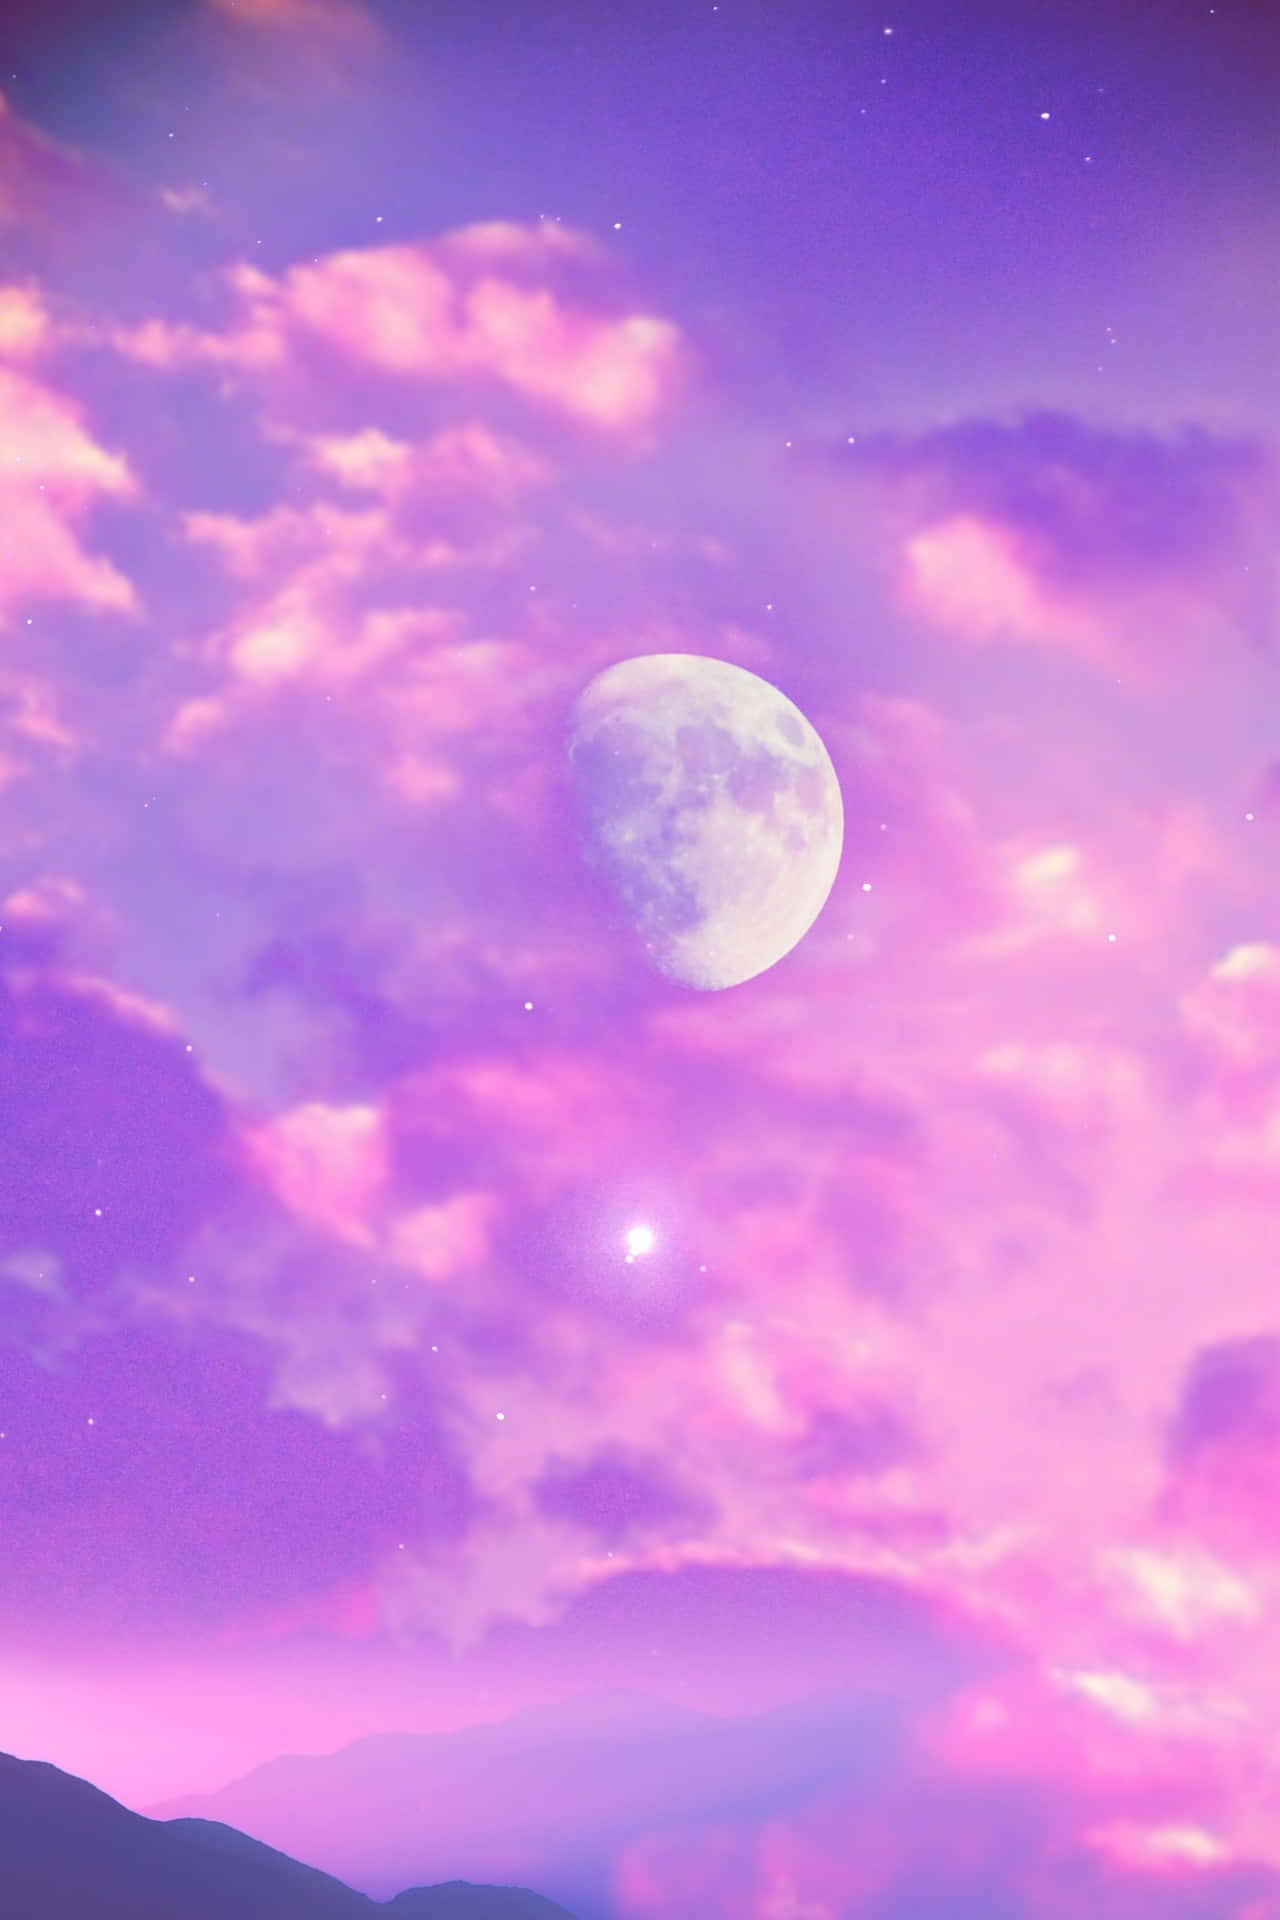 Trippy Aesthetic Cloud Pastel Purple With Moon Wallpaper